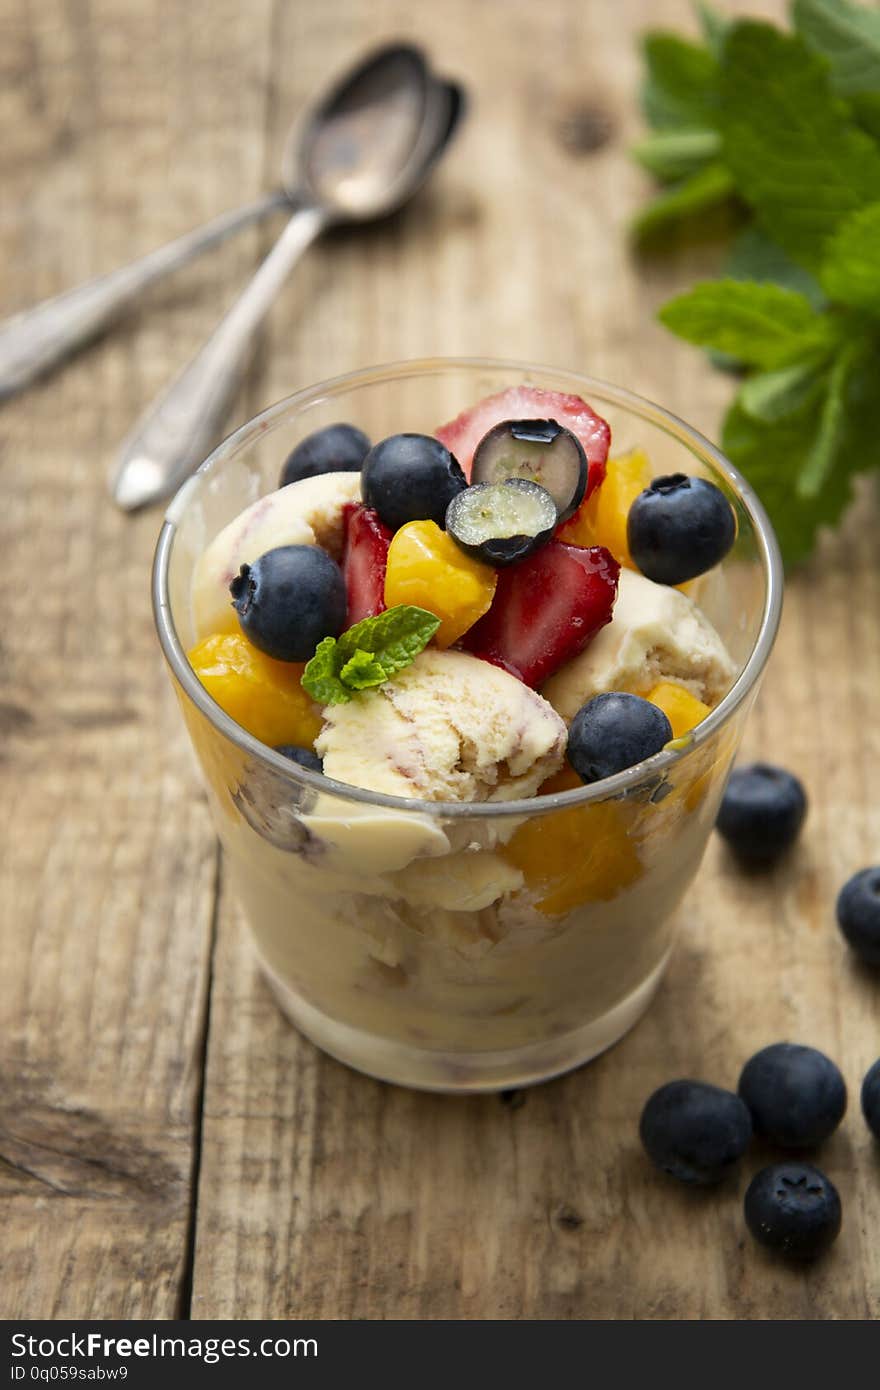 Vanilla ice cream with fruits - blueberries, strawberries, mango and mint, summer refreshing dessert. Wooden background. Glass with vanilla ice cream